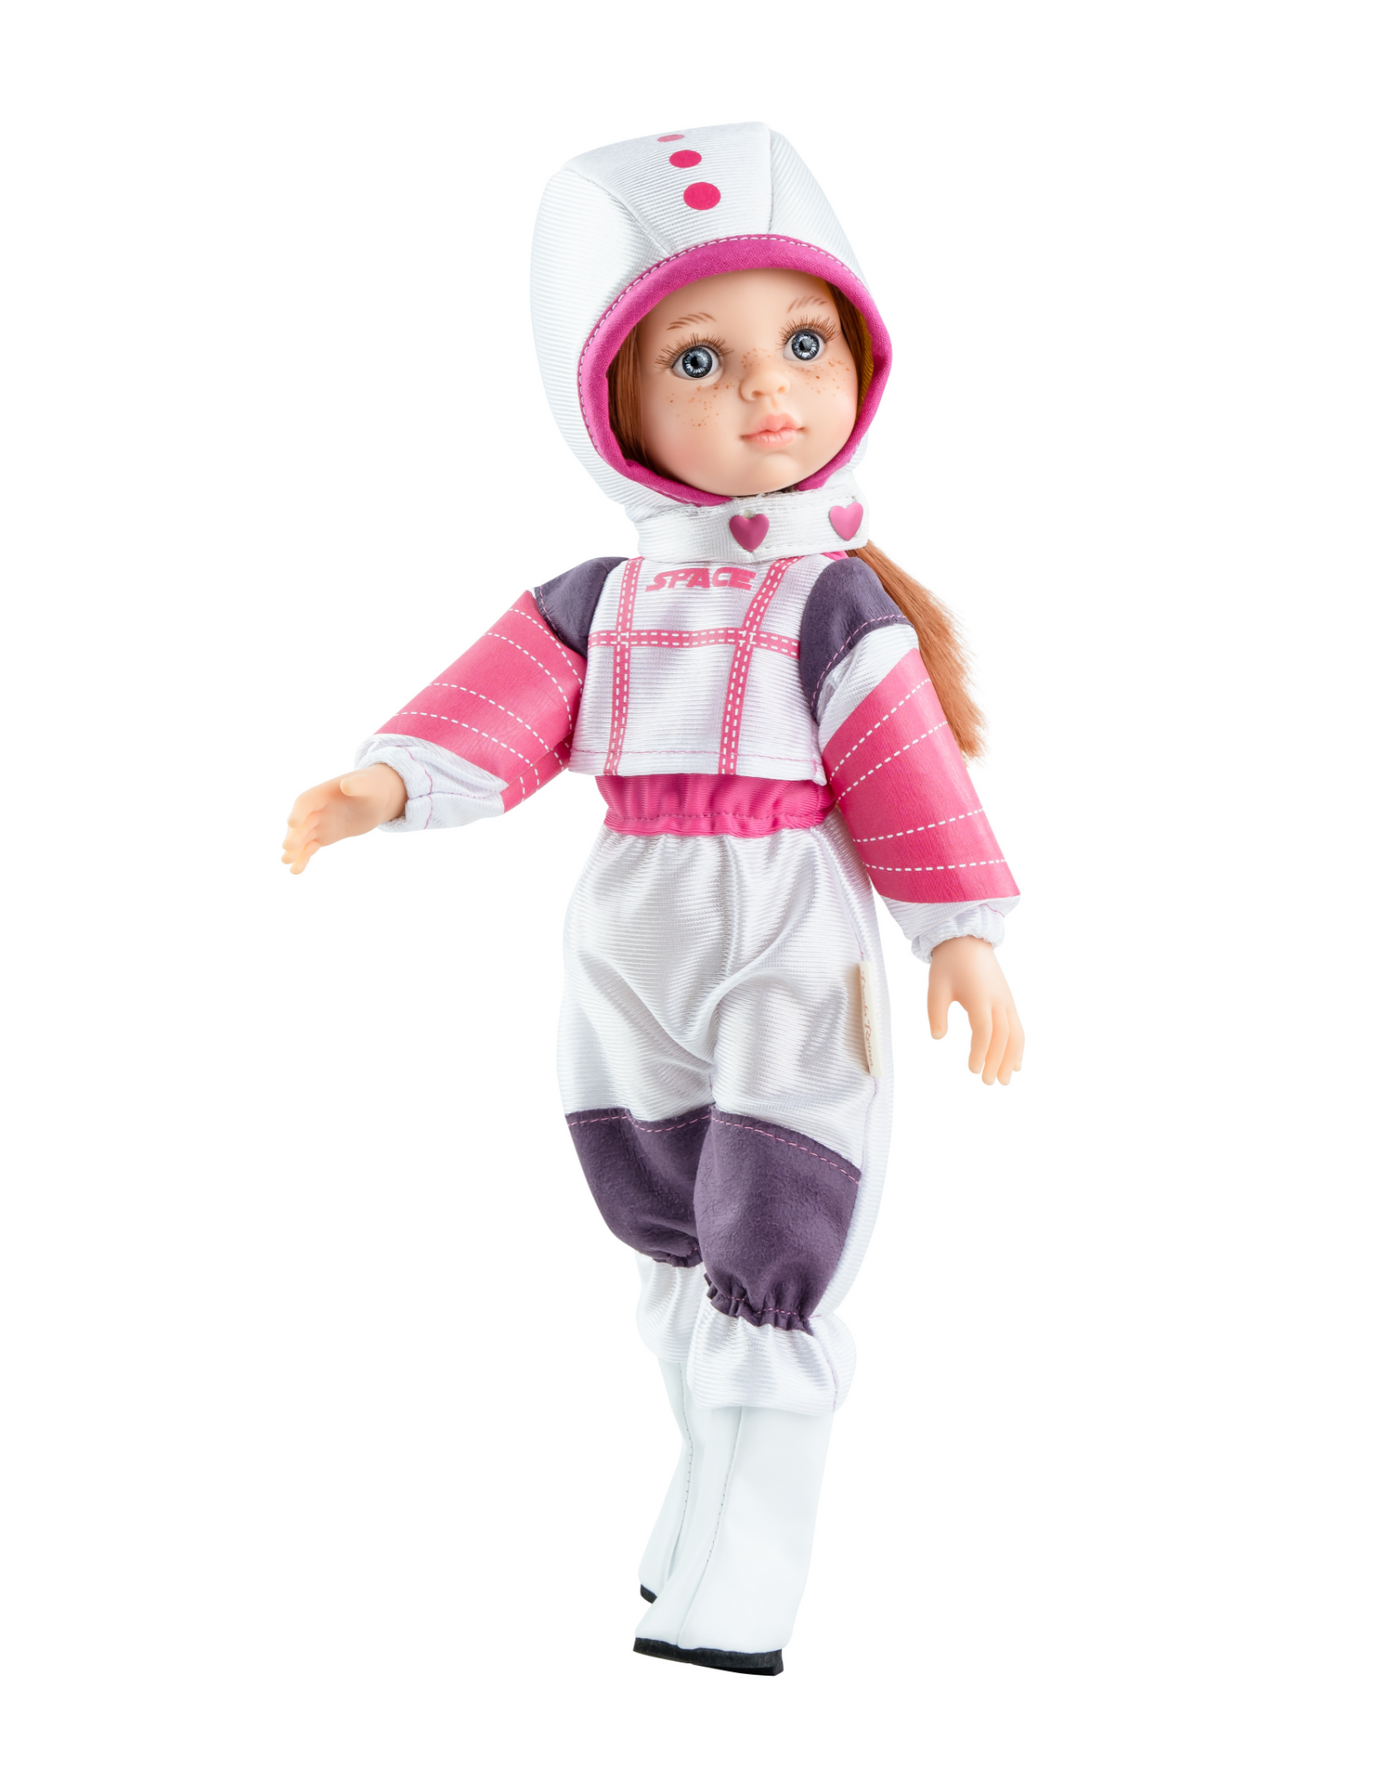 Las Amigas Doll Clothing - Astronaut - Paola Reina